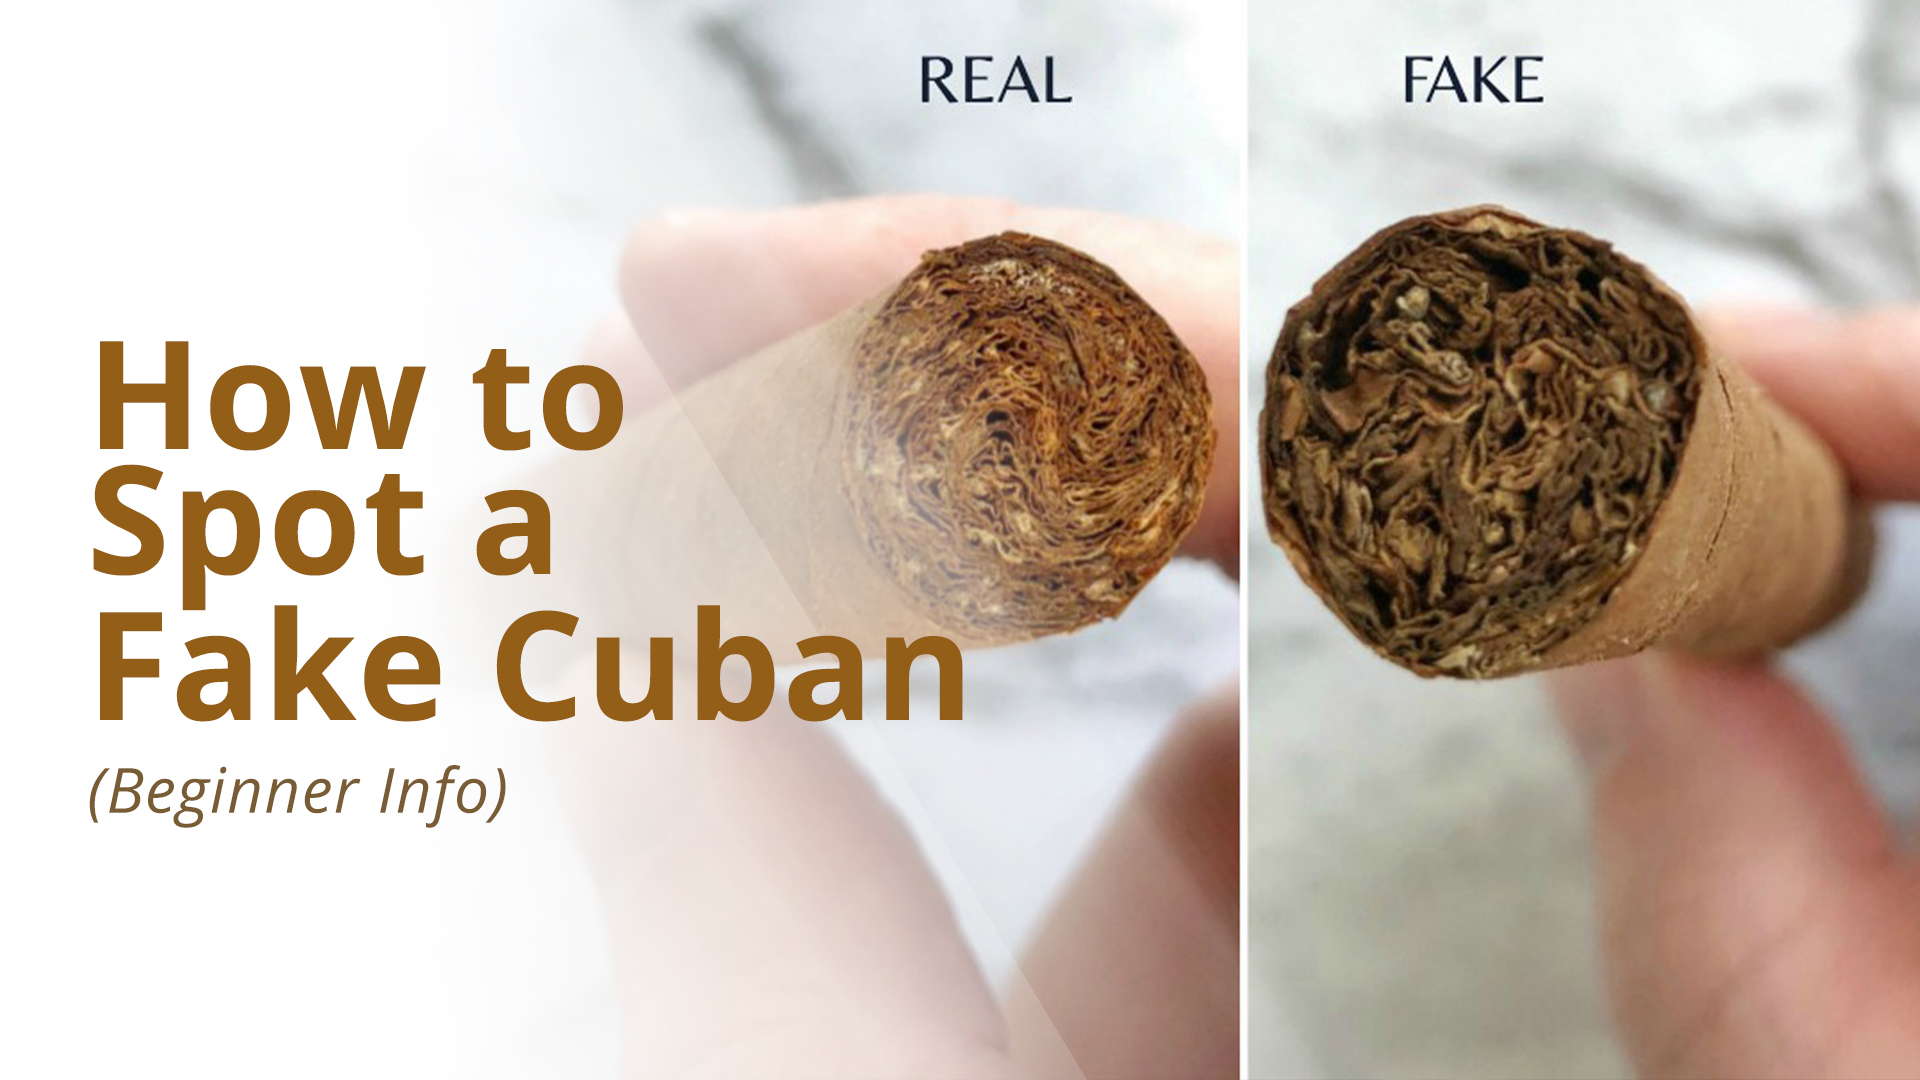 How to Make Fake Cigars